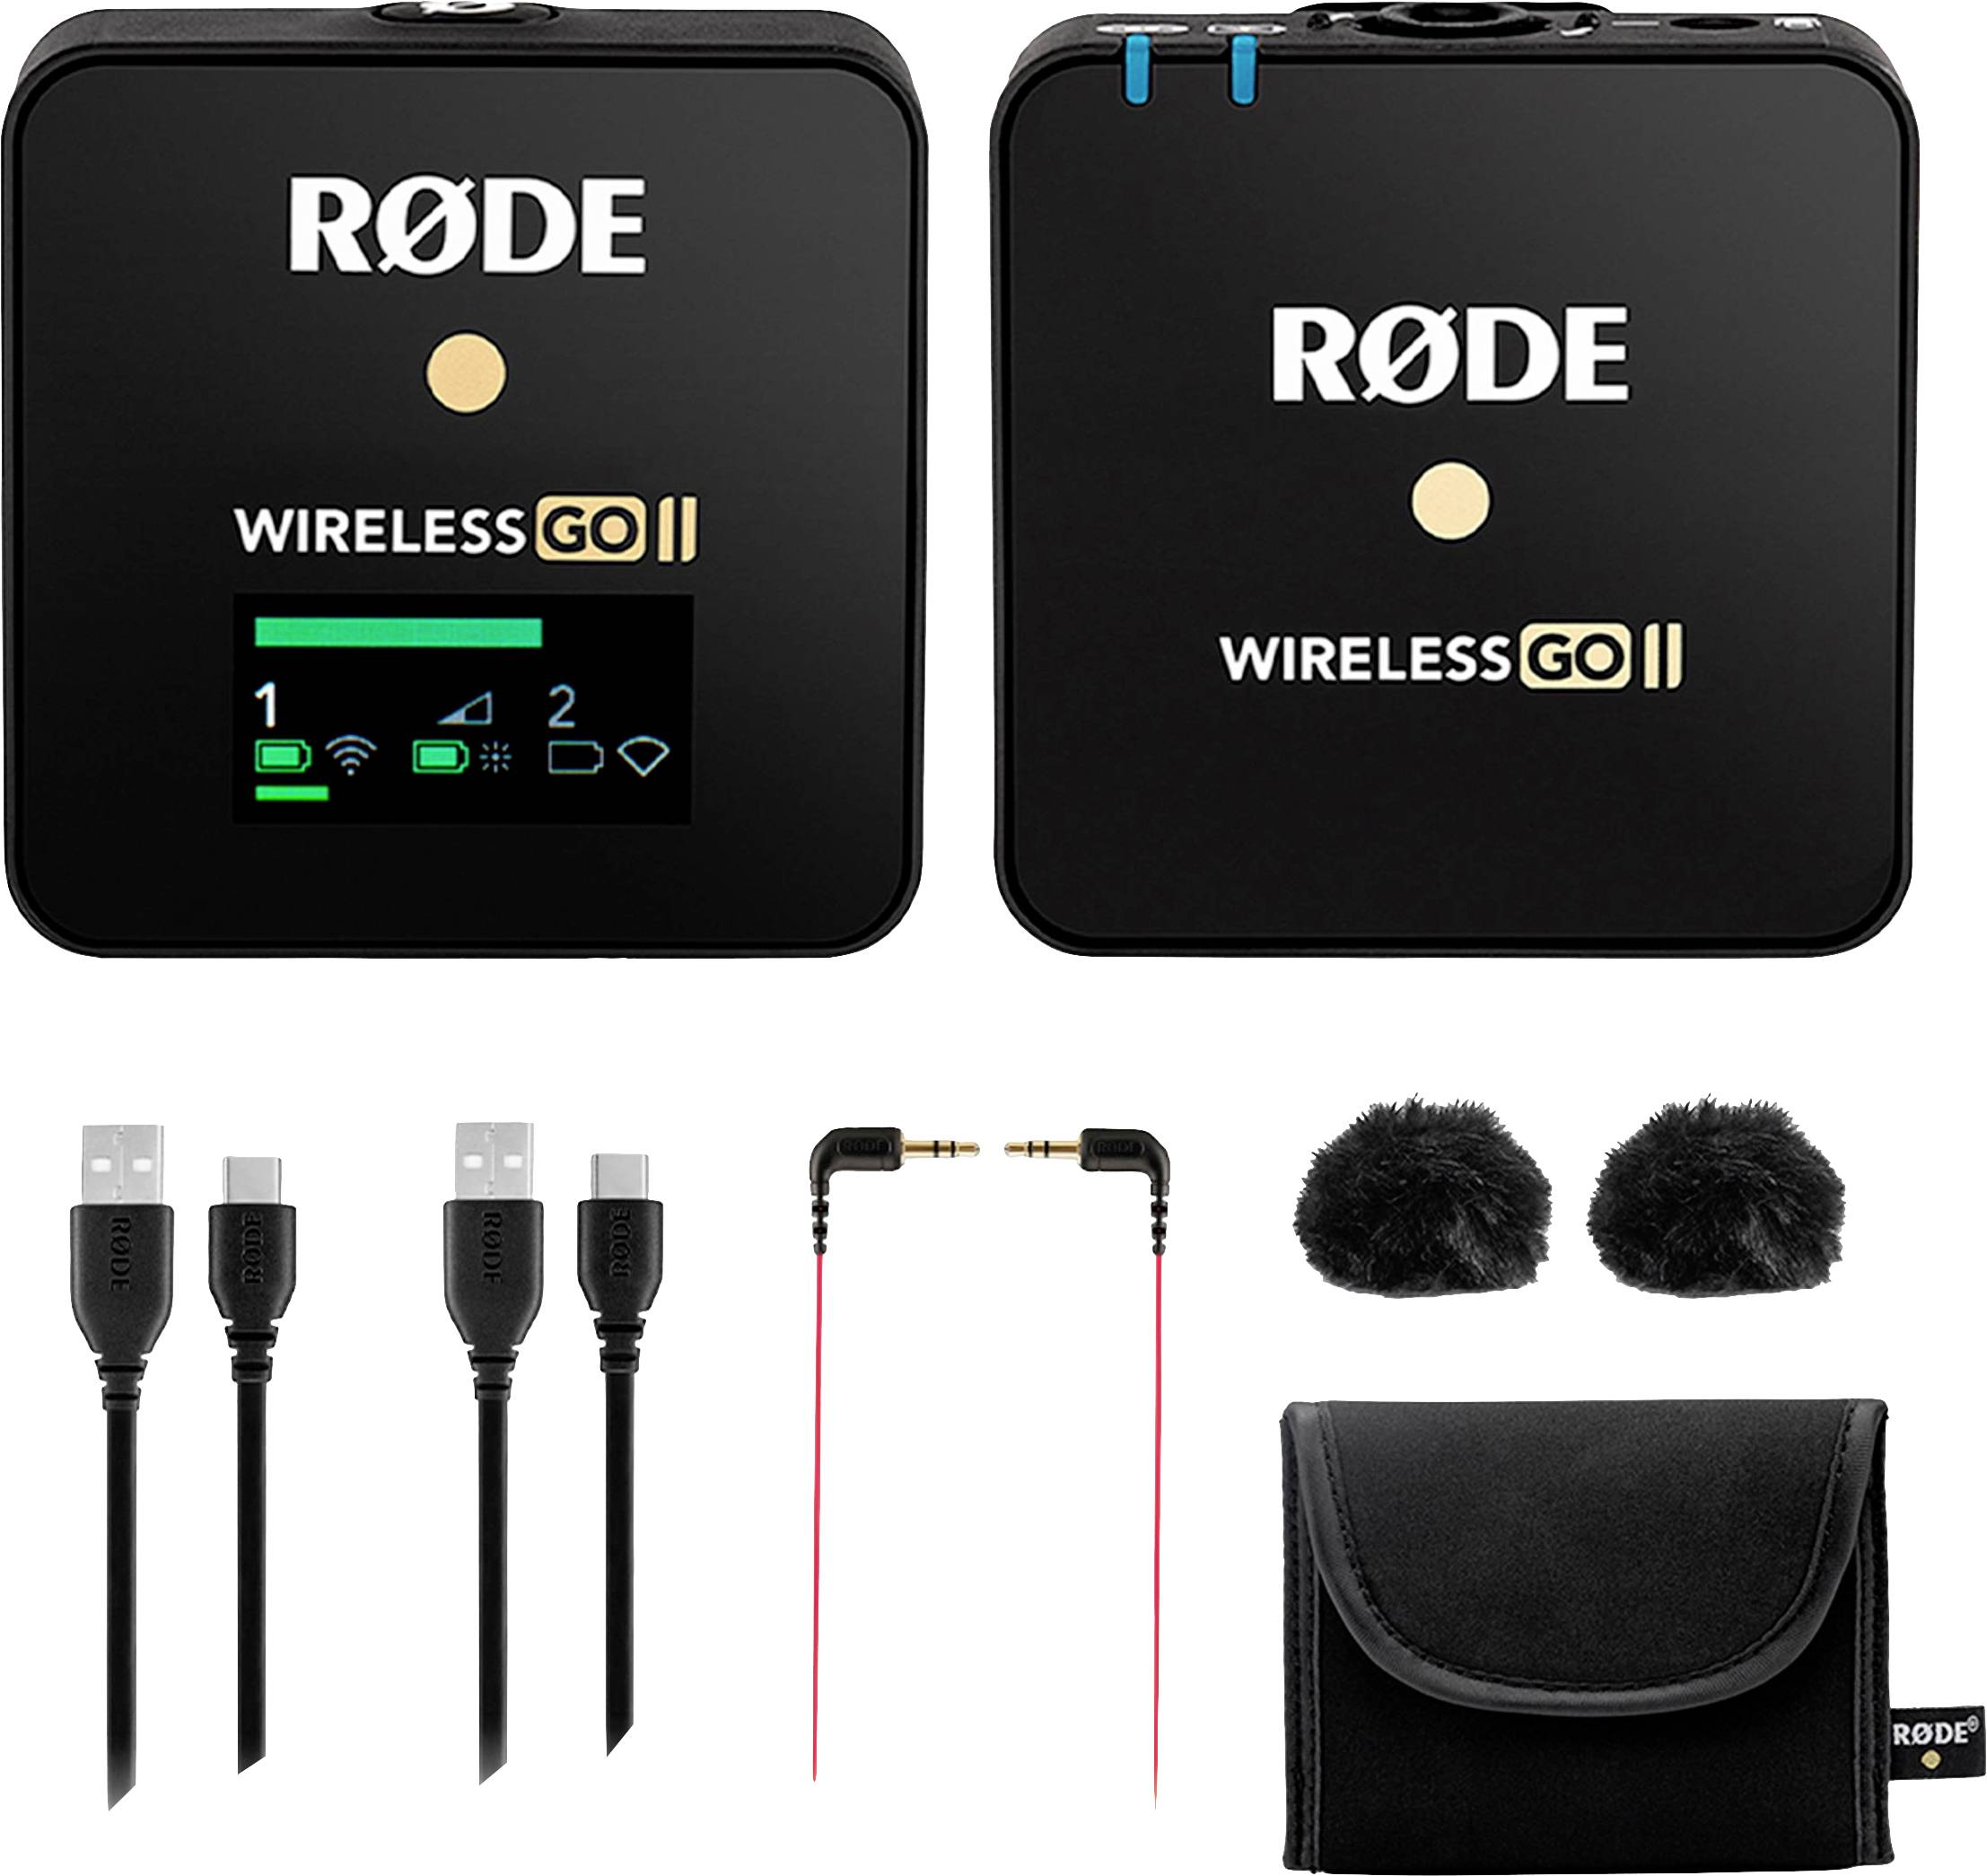 RODE Wireless GO II Funksystem,1x Sender TX,1x Empfänger RX, 3.5mm Klinkenk., 2x Windschutz, USB Kab